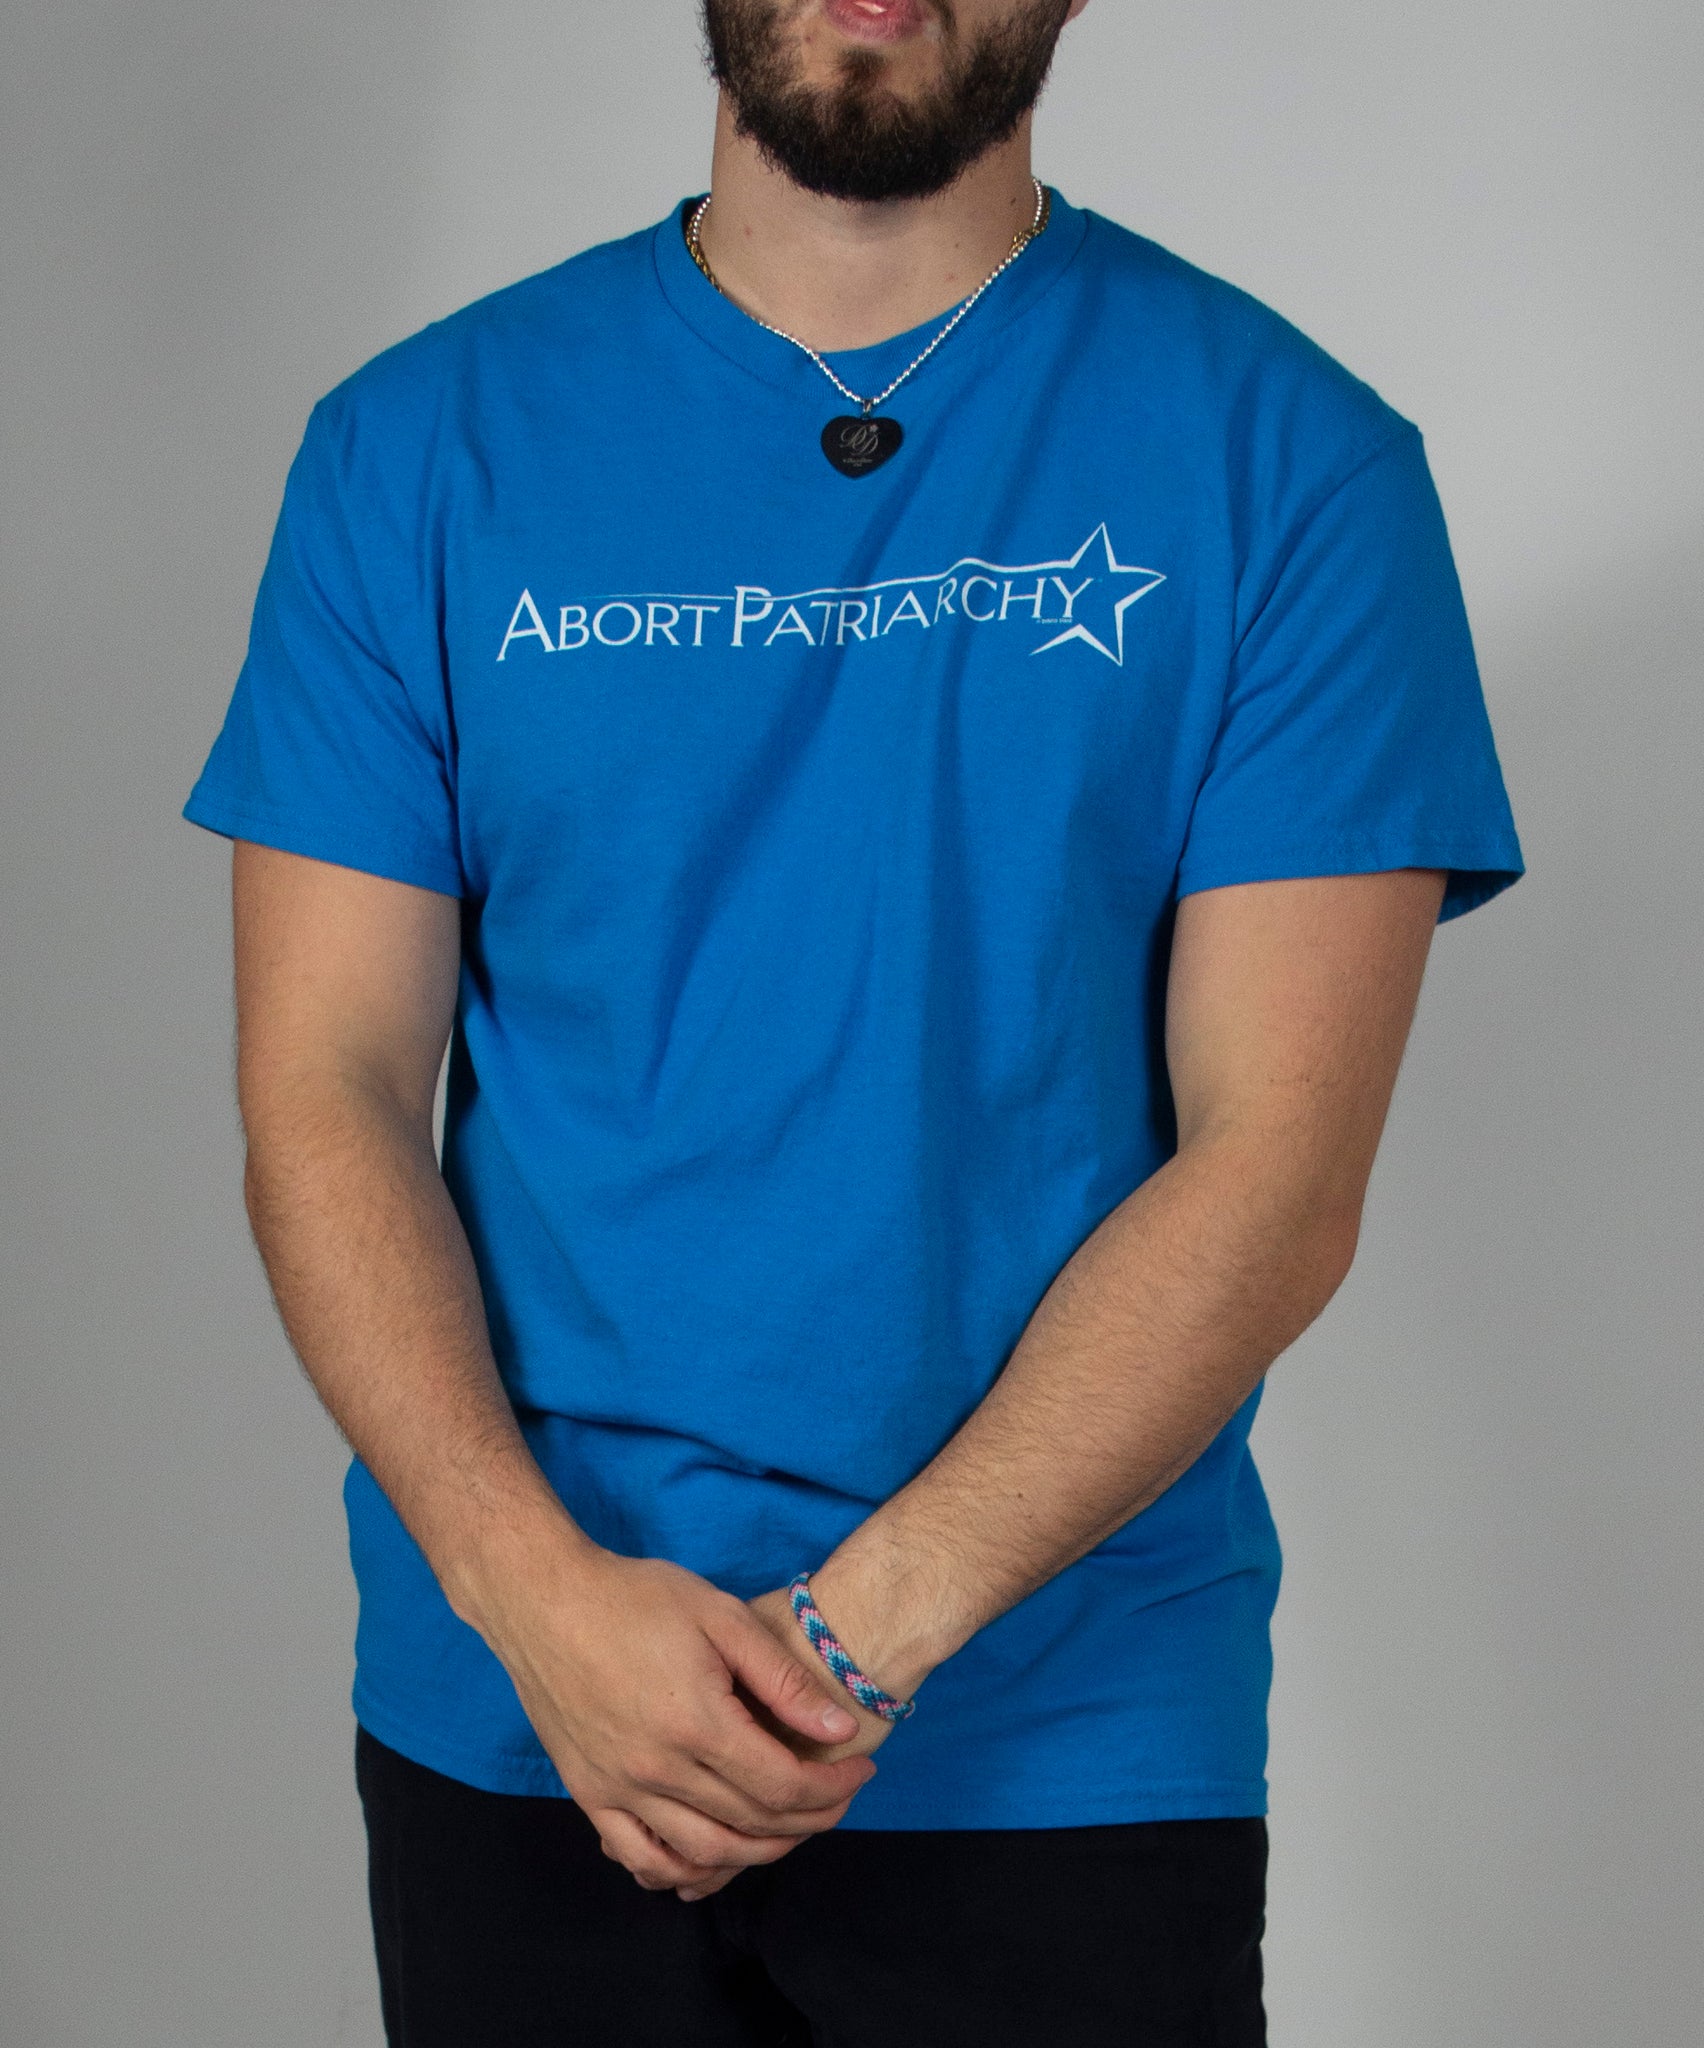 Abort Patriarchy Unisex T-Shirt (White/Blue)